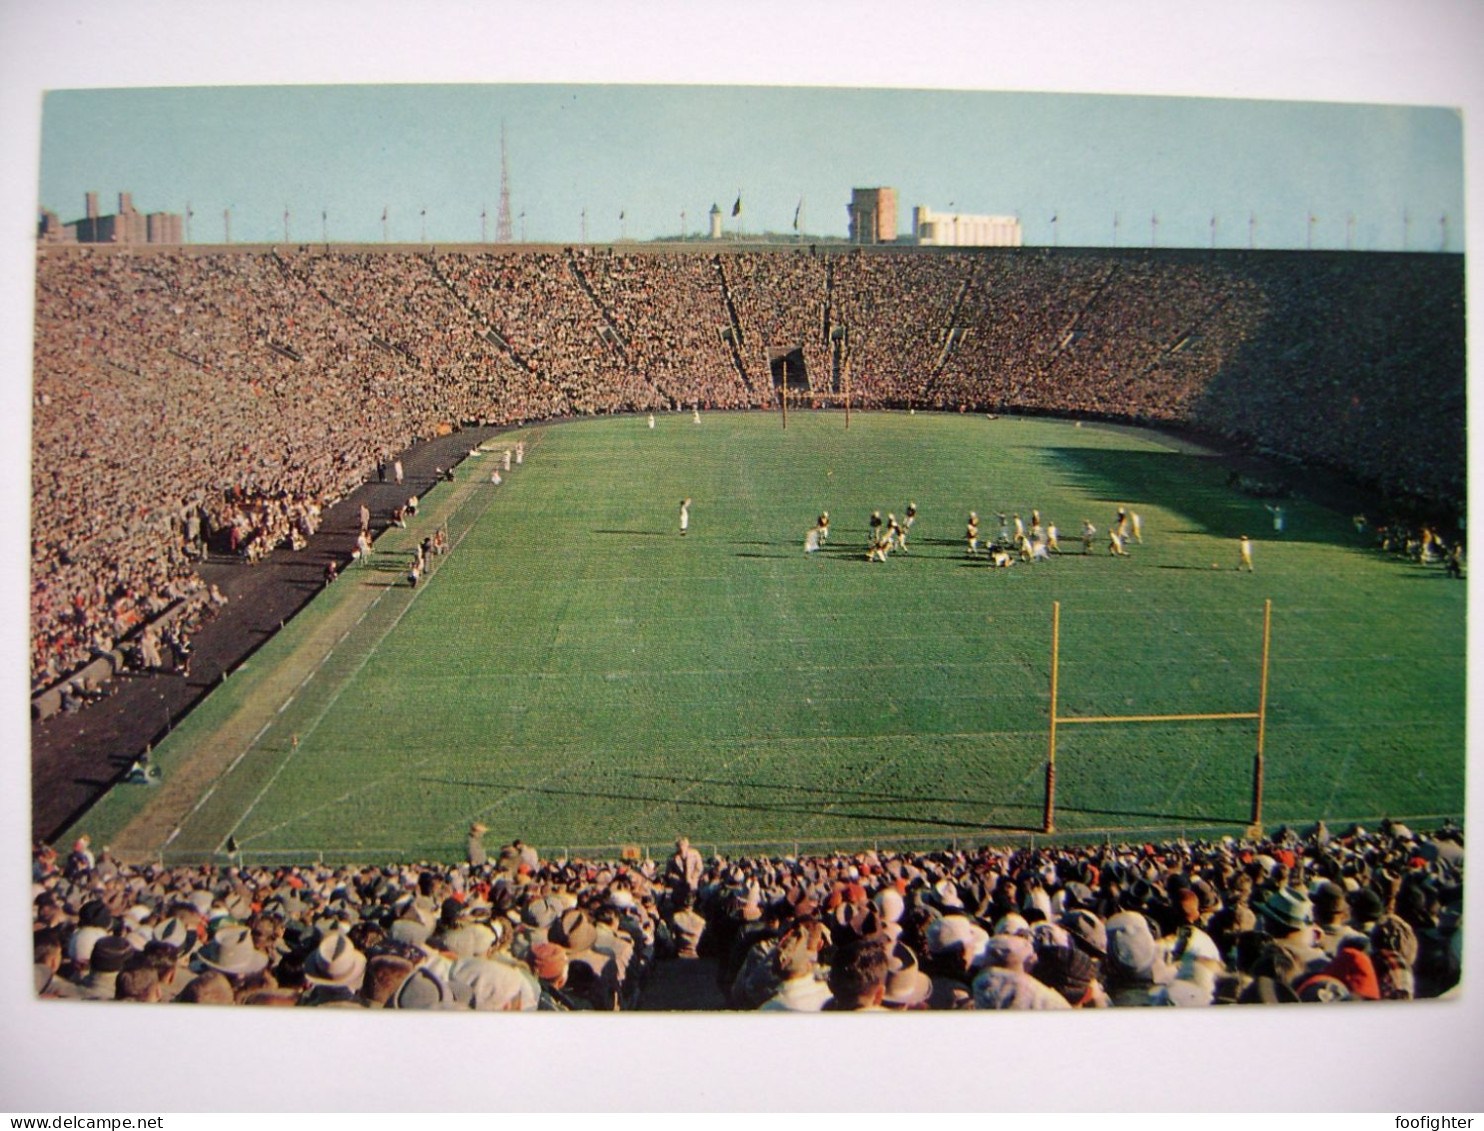 Minnesota - Minneapolis - Football Memorial Stadium Estadio Stadio - Ca 1960s - Minneapolis